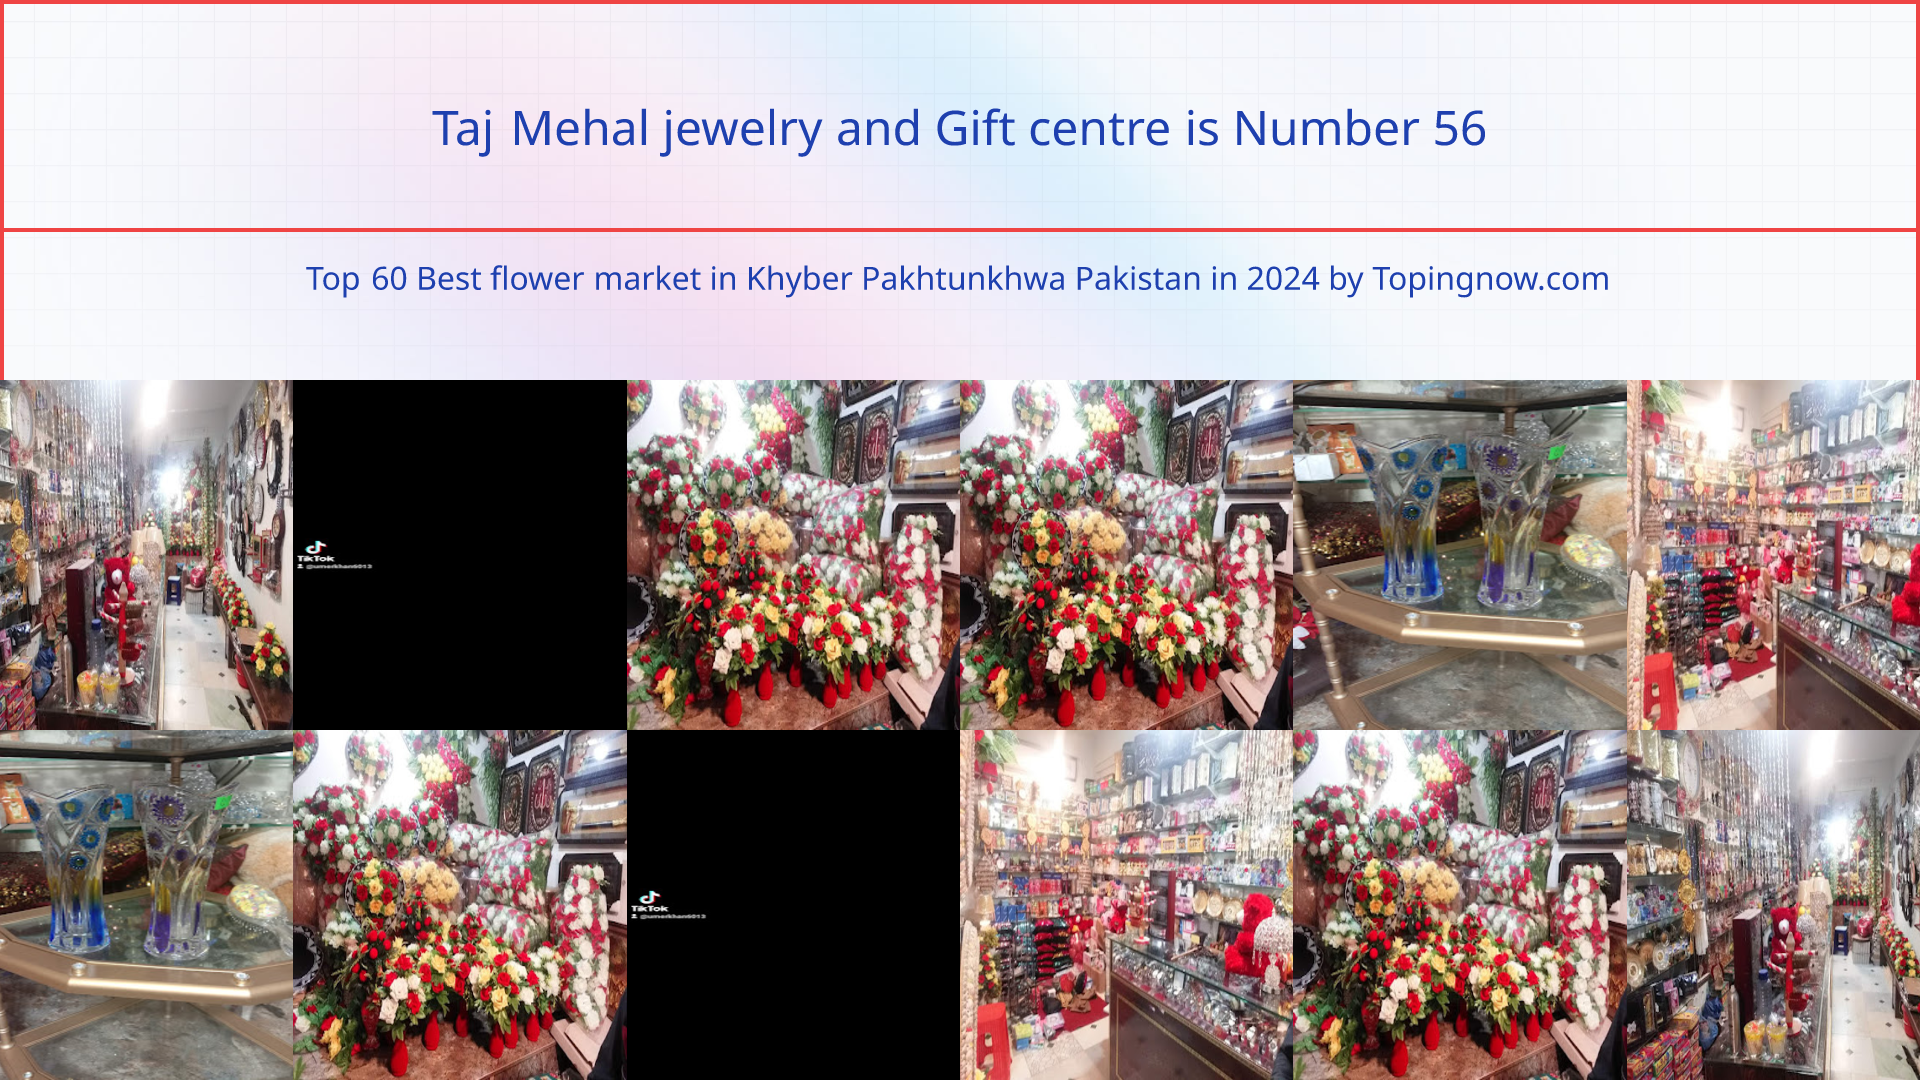 Taj Mehal jewelry and Gift centre: Top 60 Best flower market in Khyber Pakhtunkhwa Pakistan in 2024